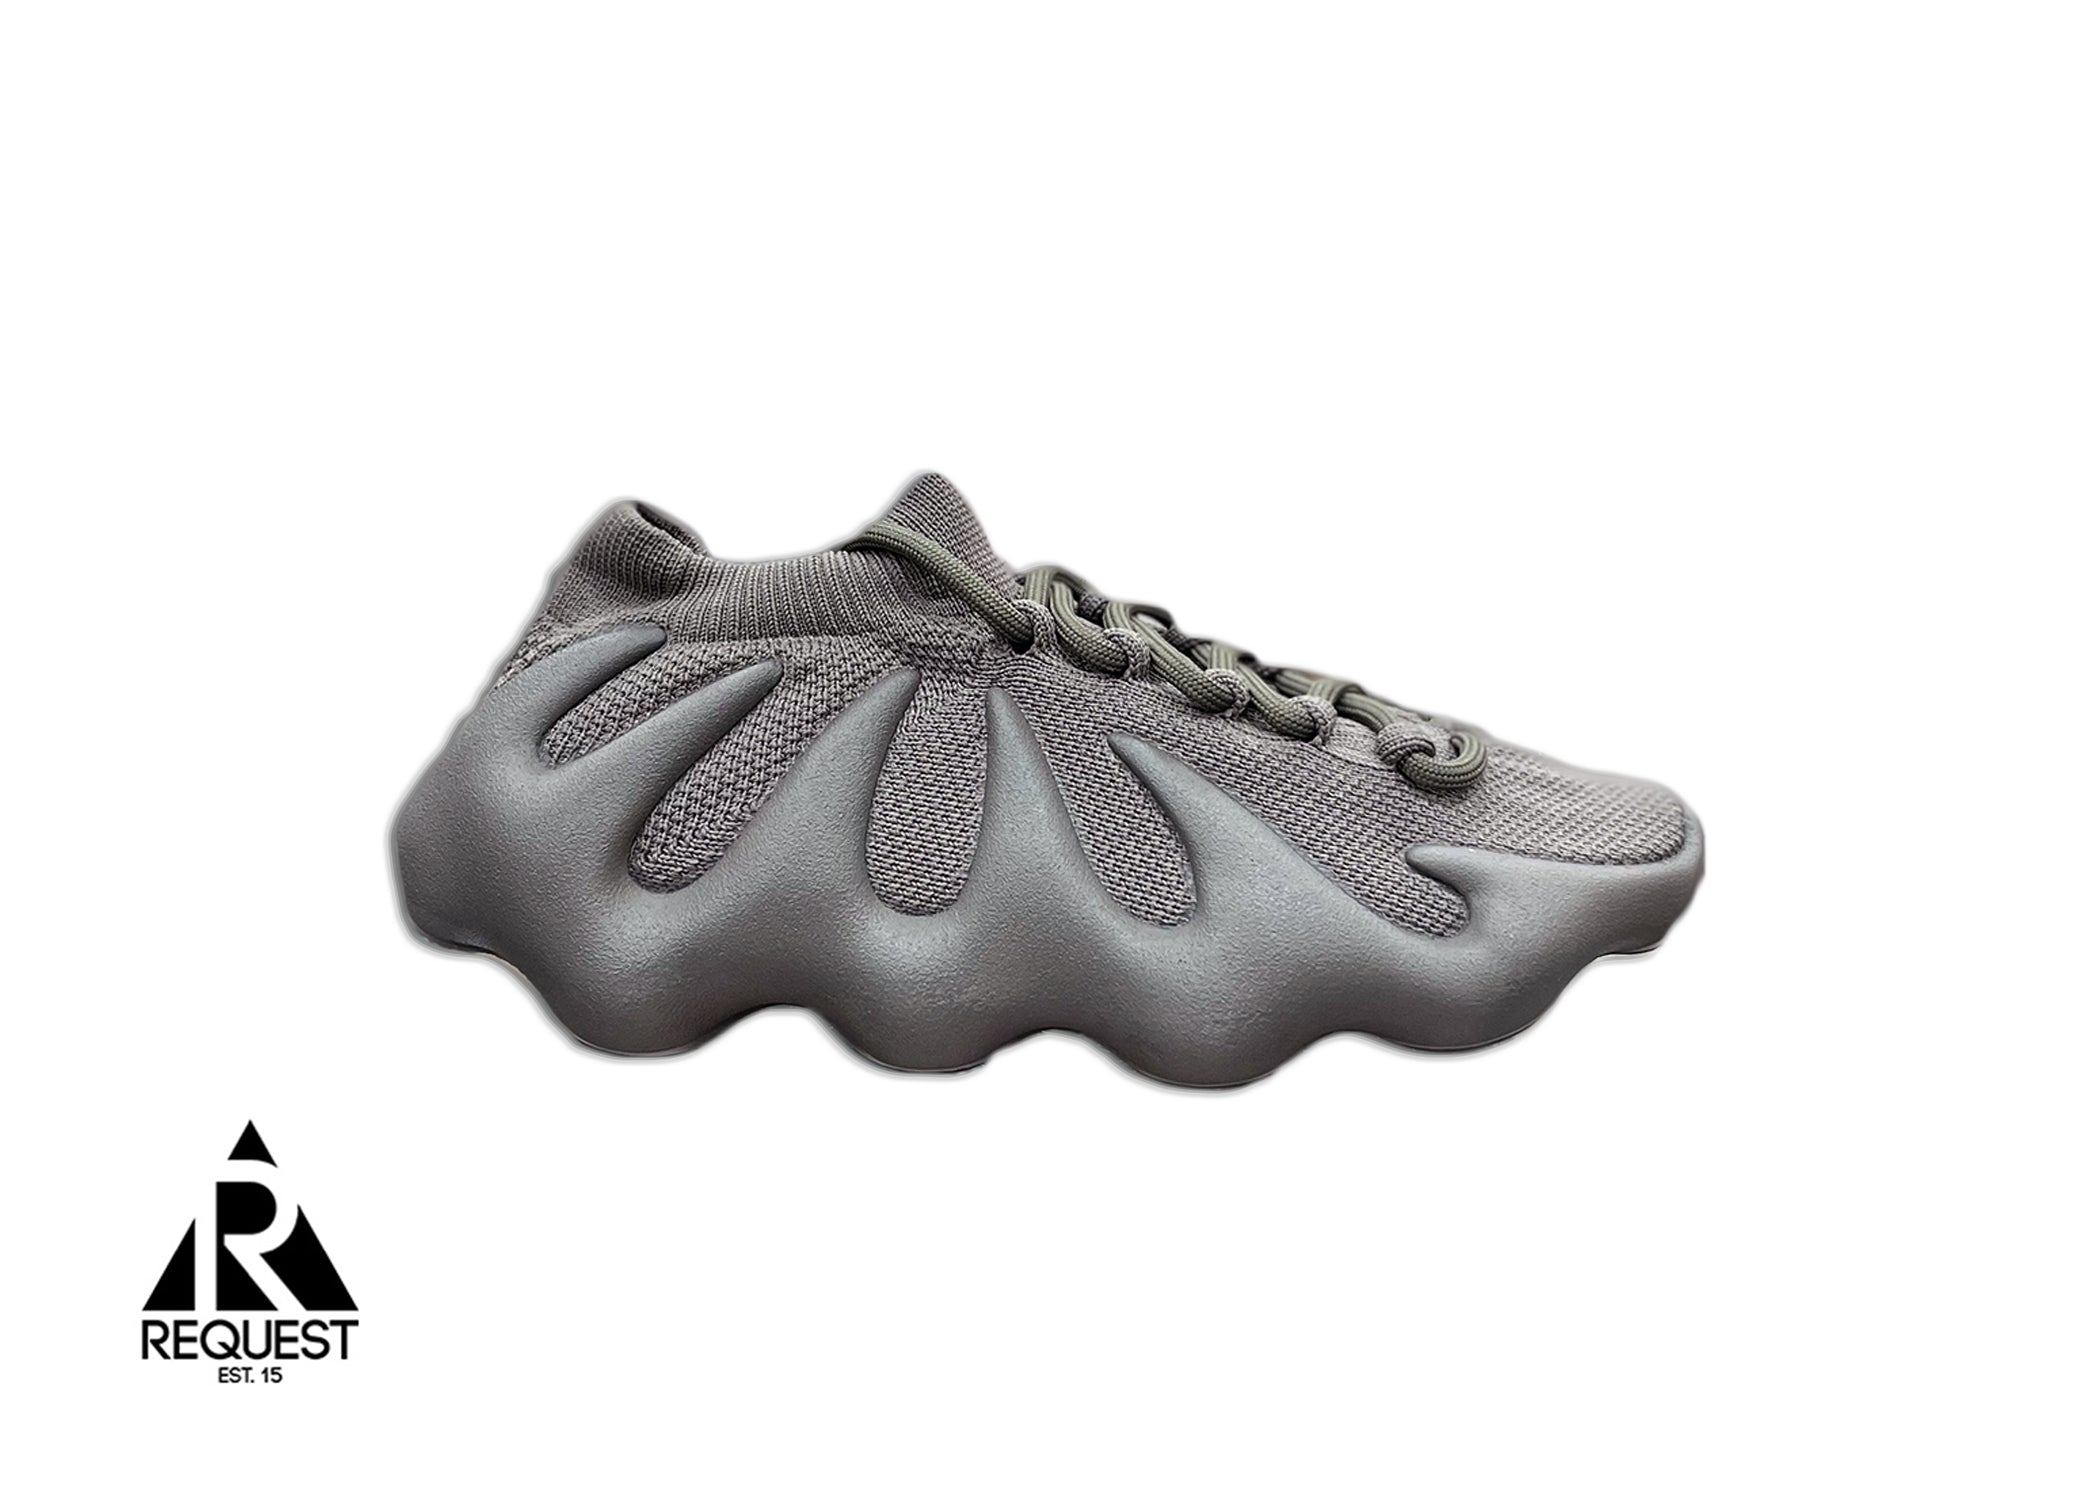 Adidas Yeezy 450 “Cinder”